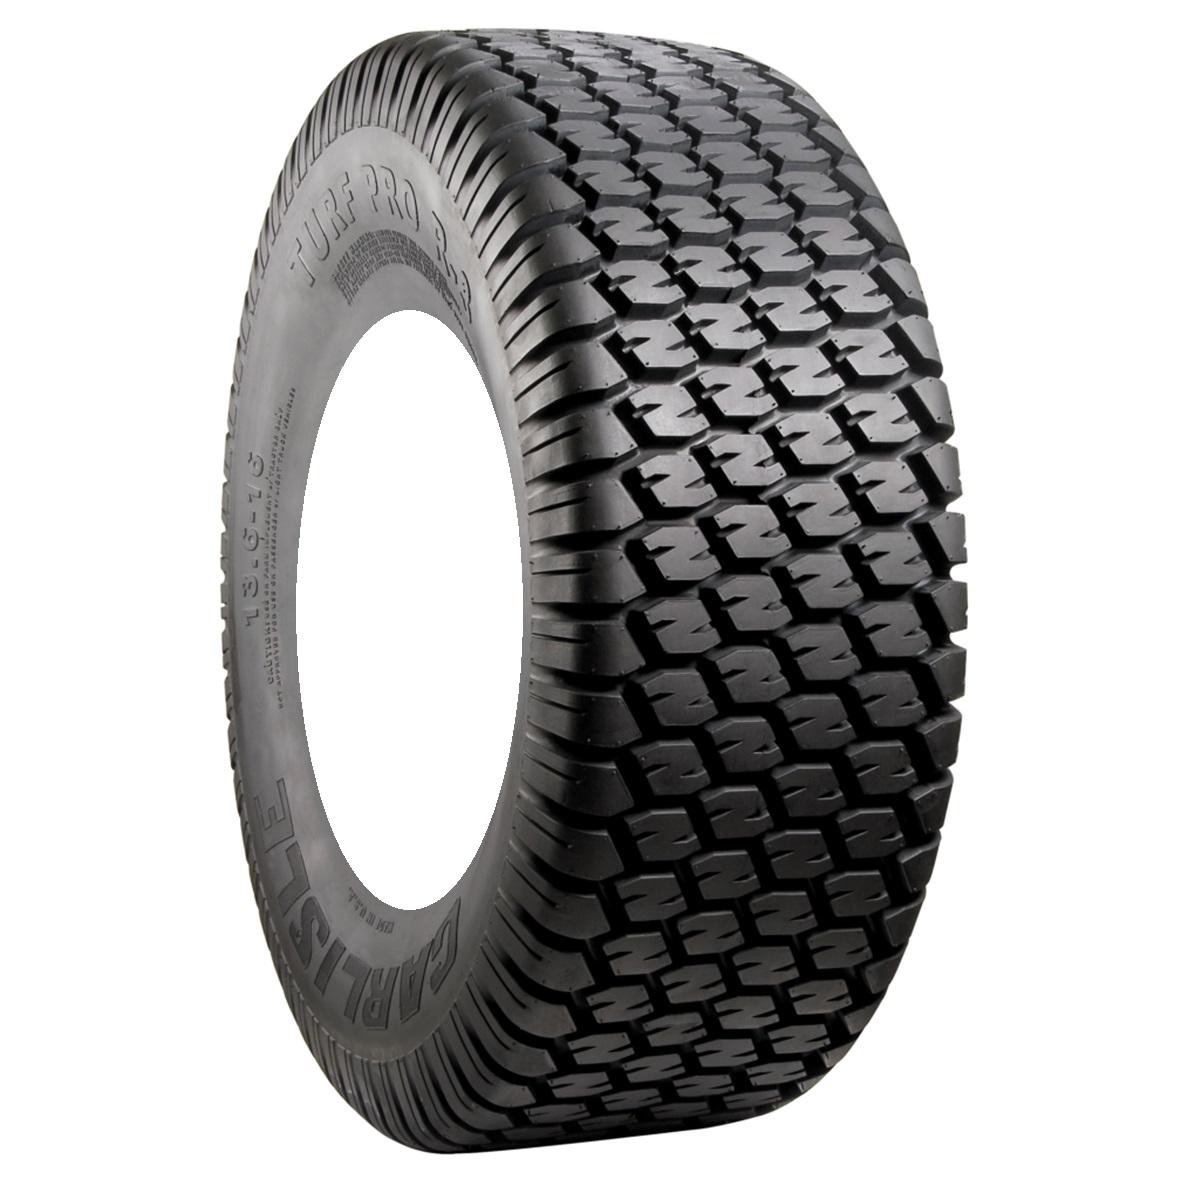 Carlisle Turf Pro Plus R3 31-15.50-15 8 Ply Yard - Lawn Tire